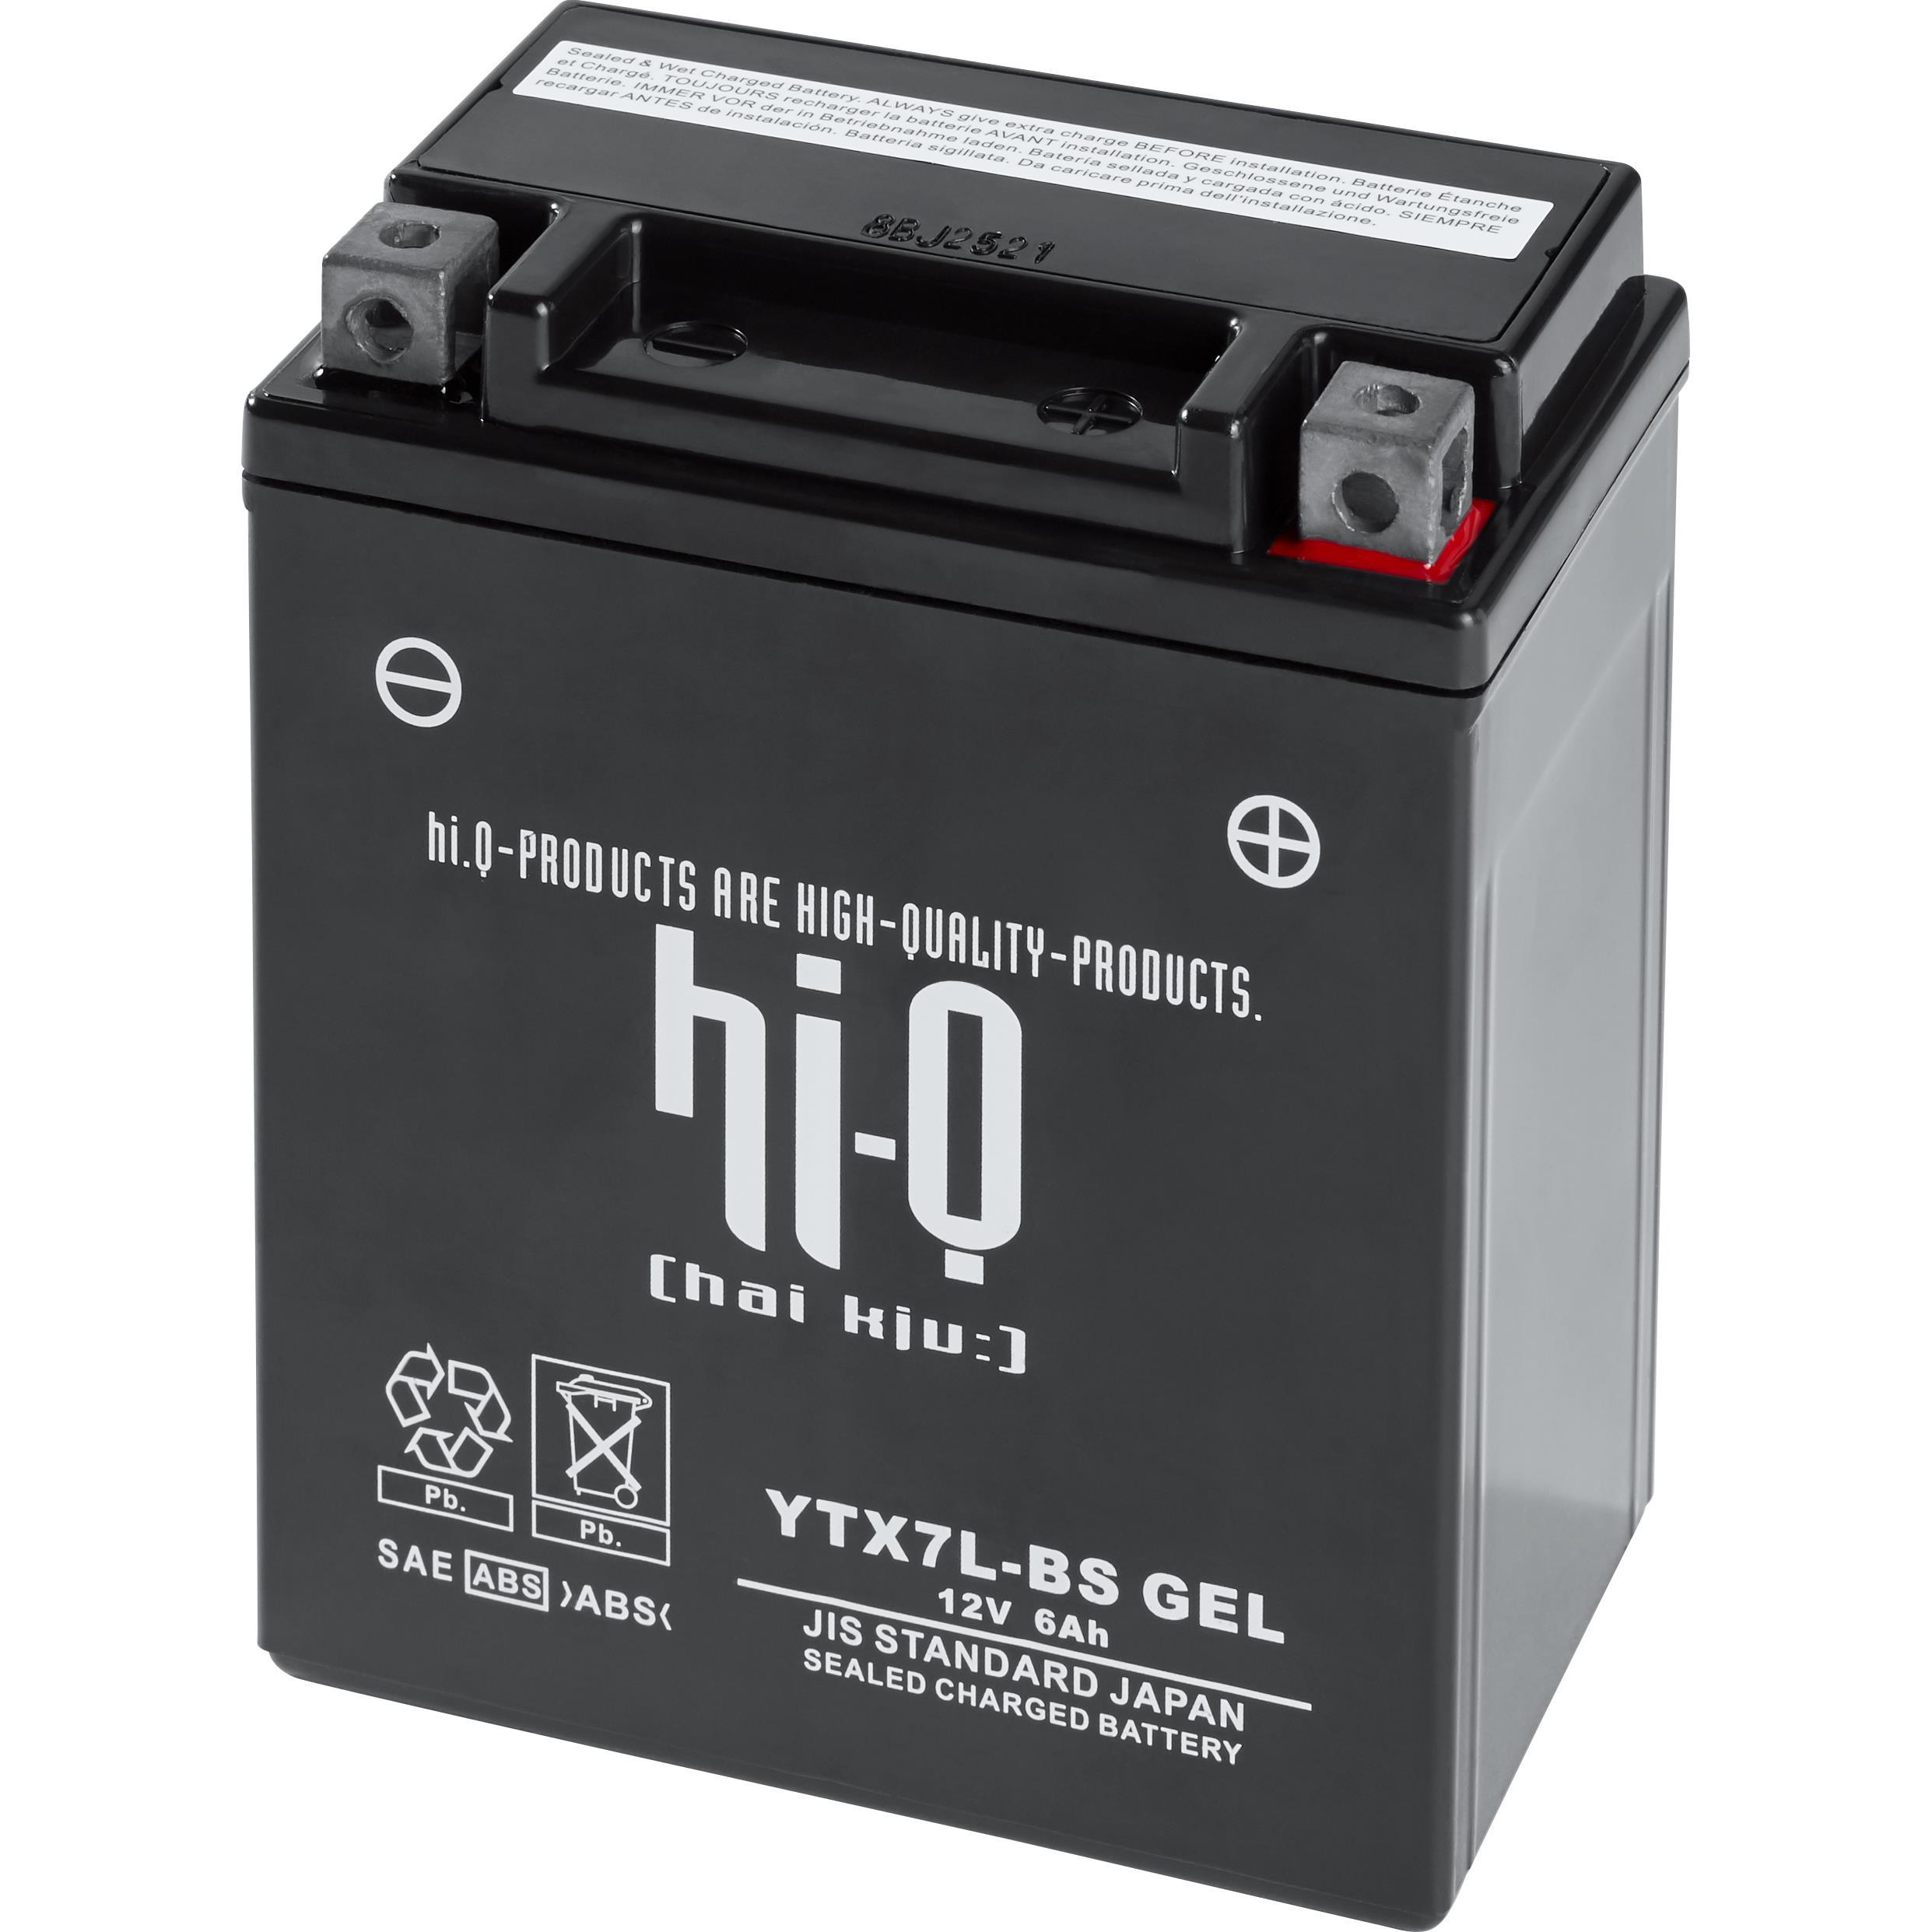 Buy Hi-Q battery AGM Gel sealed HTX7L, 12V, 6Ah (YTX7L) Neutral